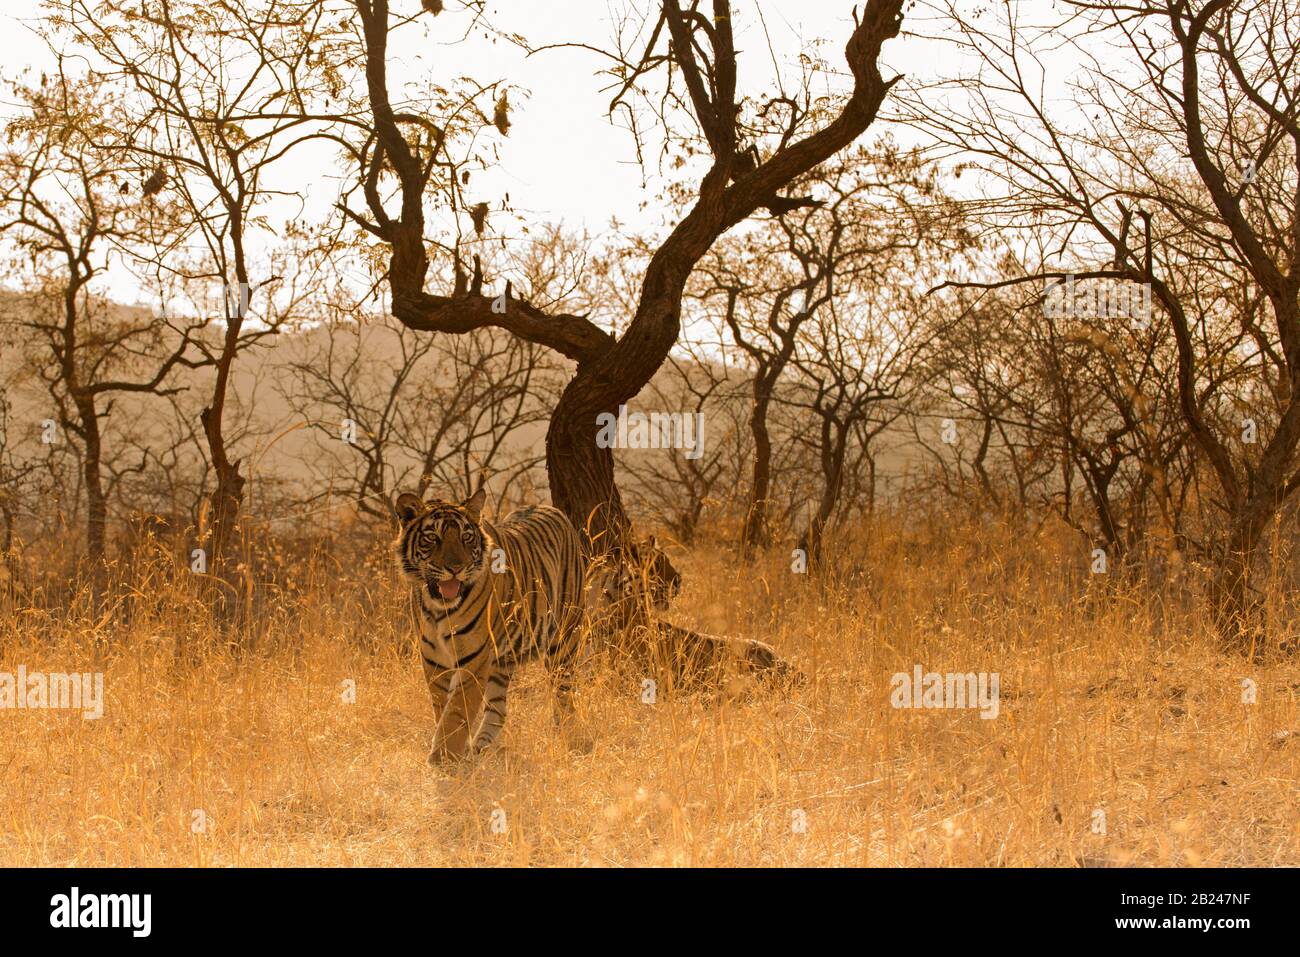 Tiger (Panthera tigris), cub, Ranthambore National Park, Rajasthan, Inde Banque D'Images